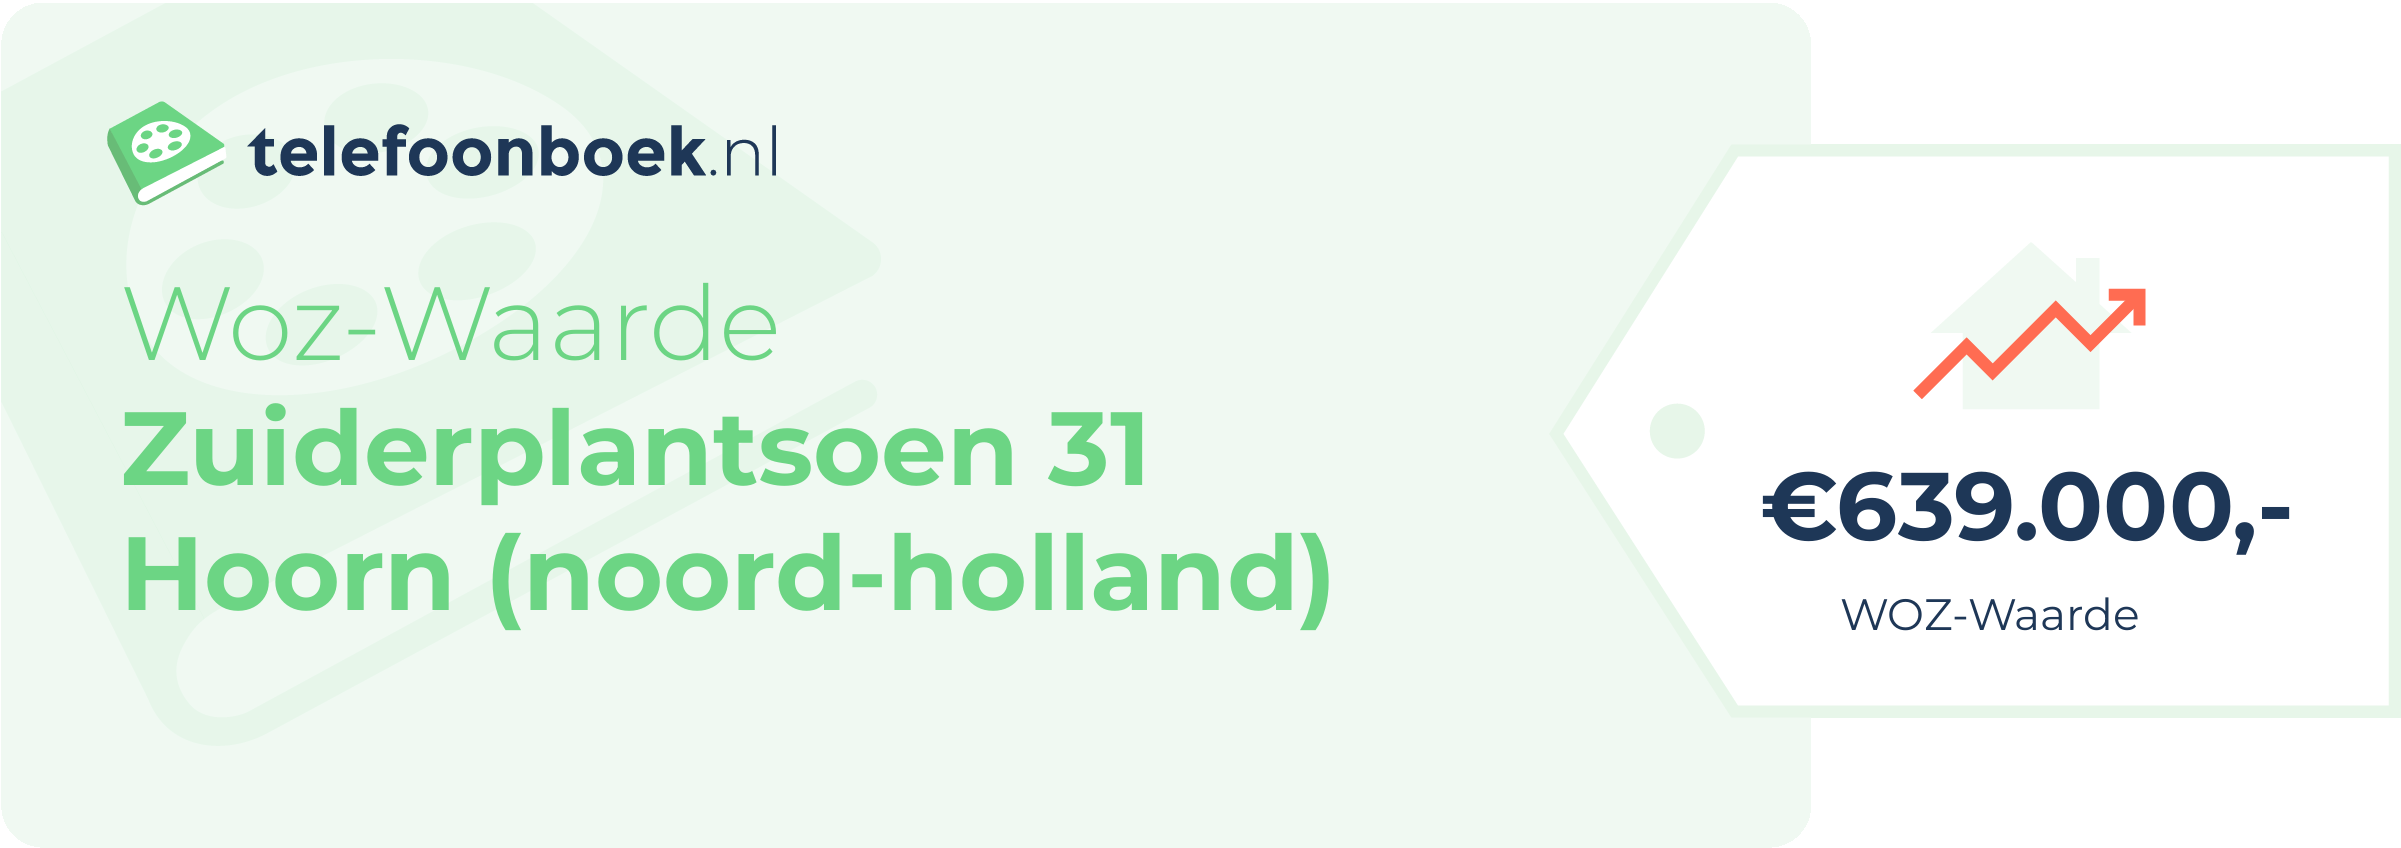 WOZ-waarde Zuiderplantsoen 31 Hoorn (Noord-Holland)